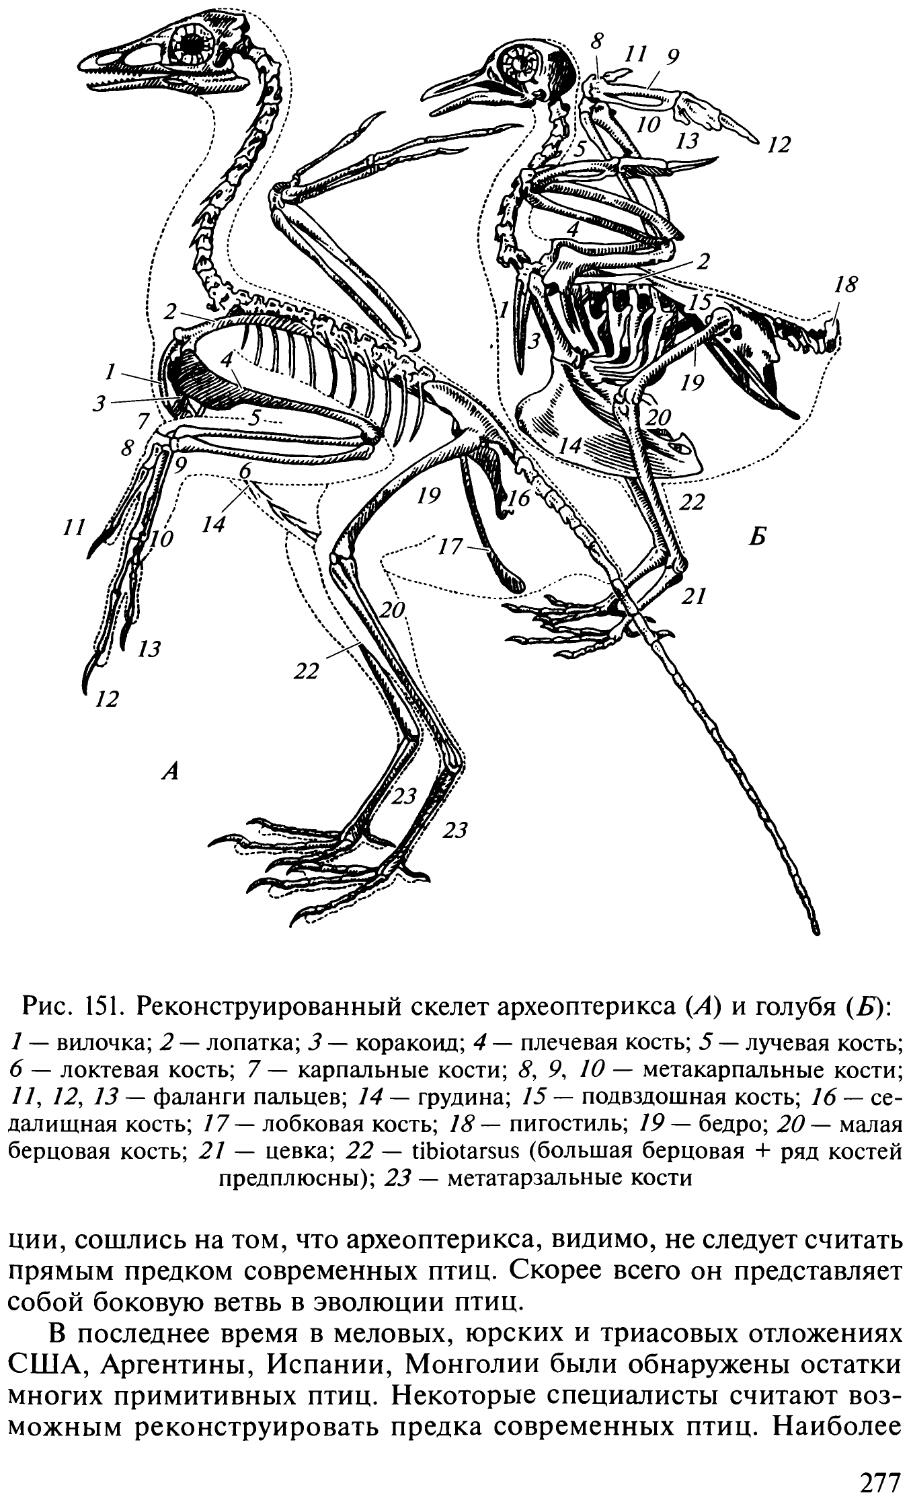 Вилочка у птиц это. Скелет птицы коракоид. Вороньи кости коракоиды. Коракоид кость. Археоптерикс строение.